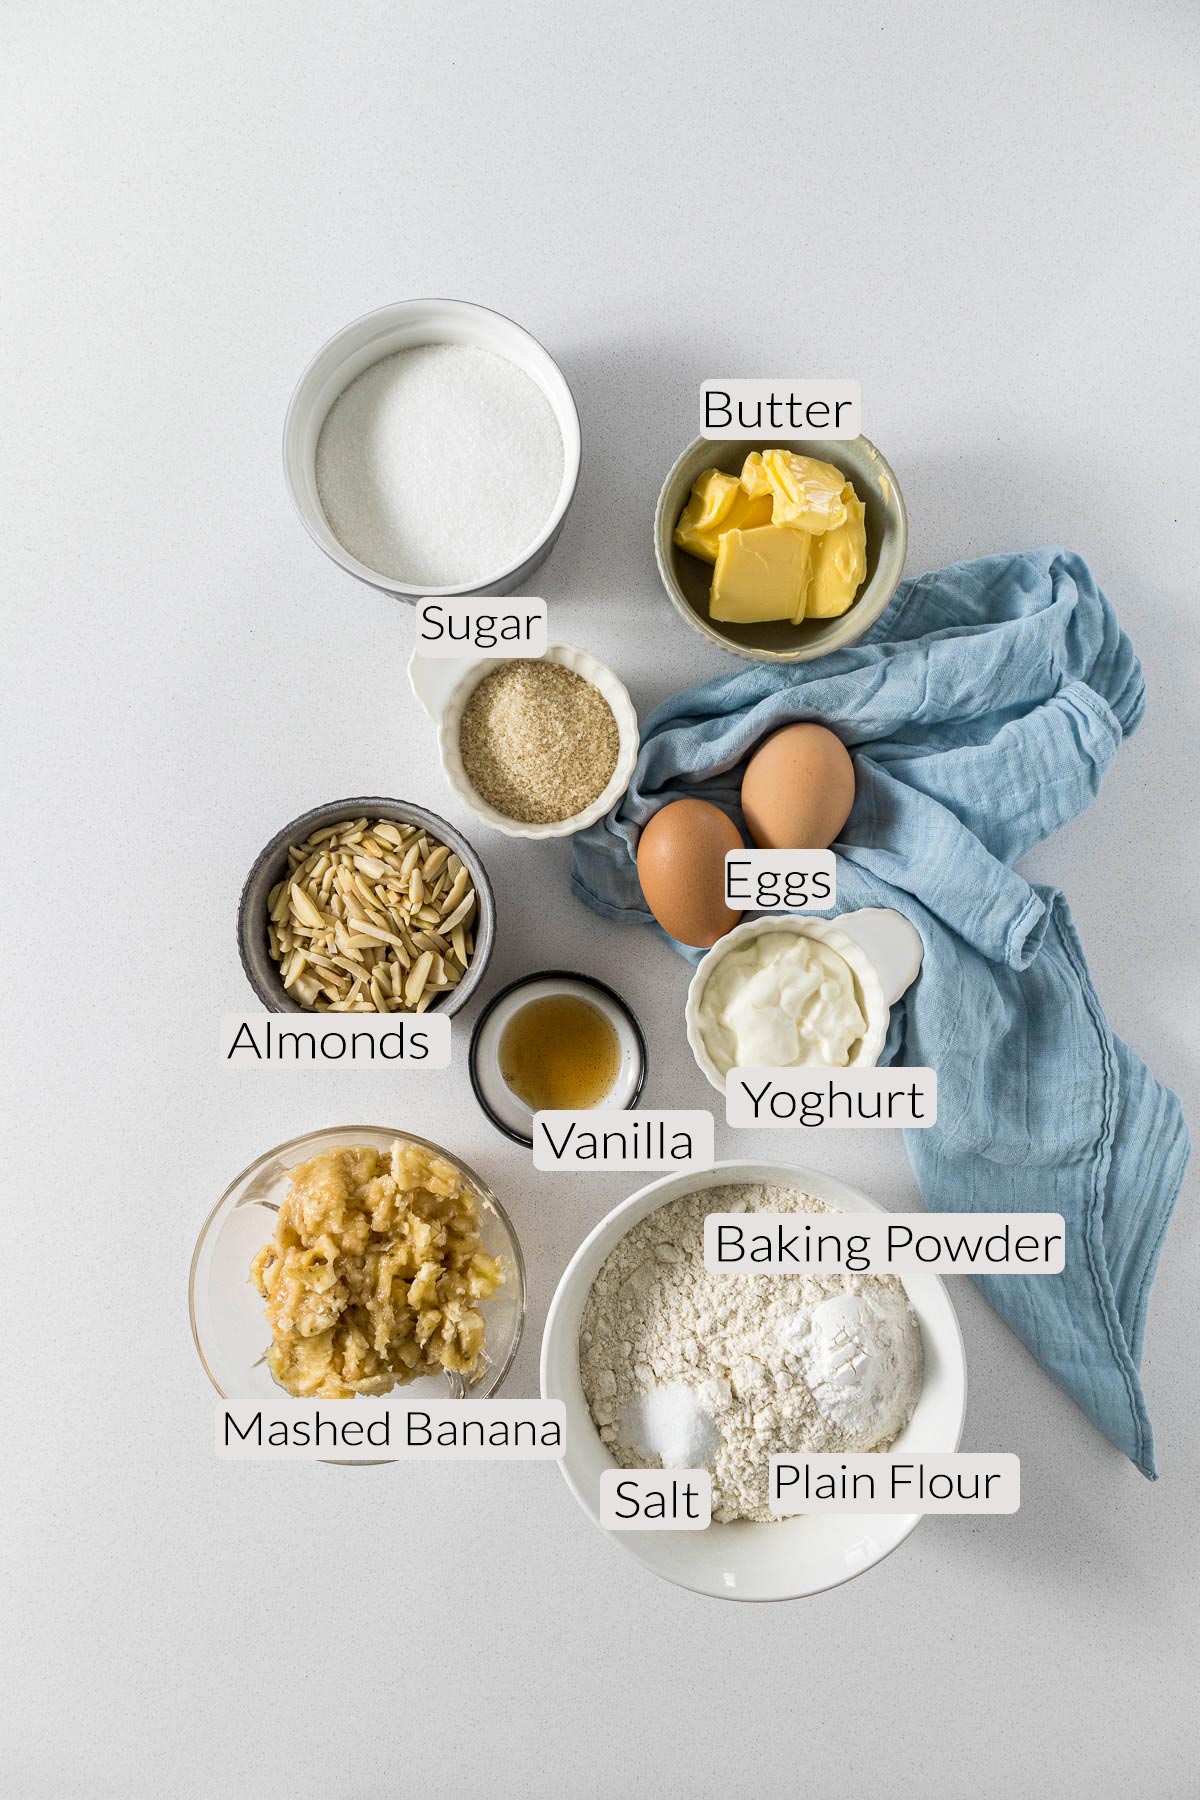 Banana bread ingredients - flour, salt, baking powder, bananas, almonds, sugar, butter, eggs and vanilla.